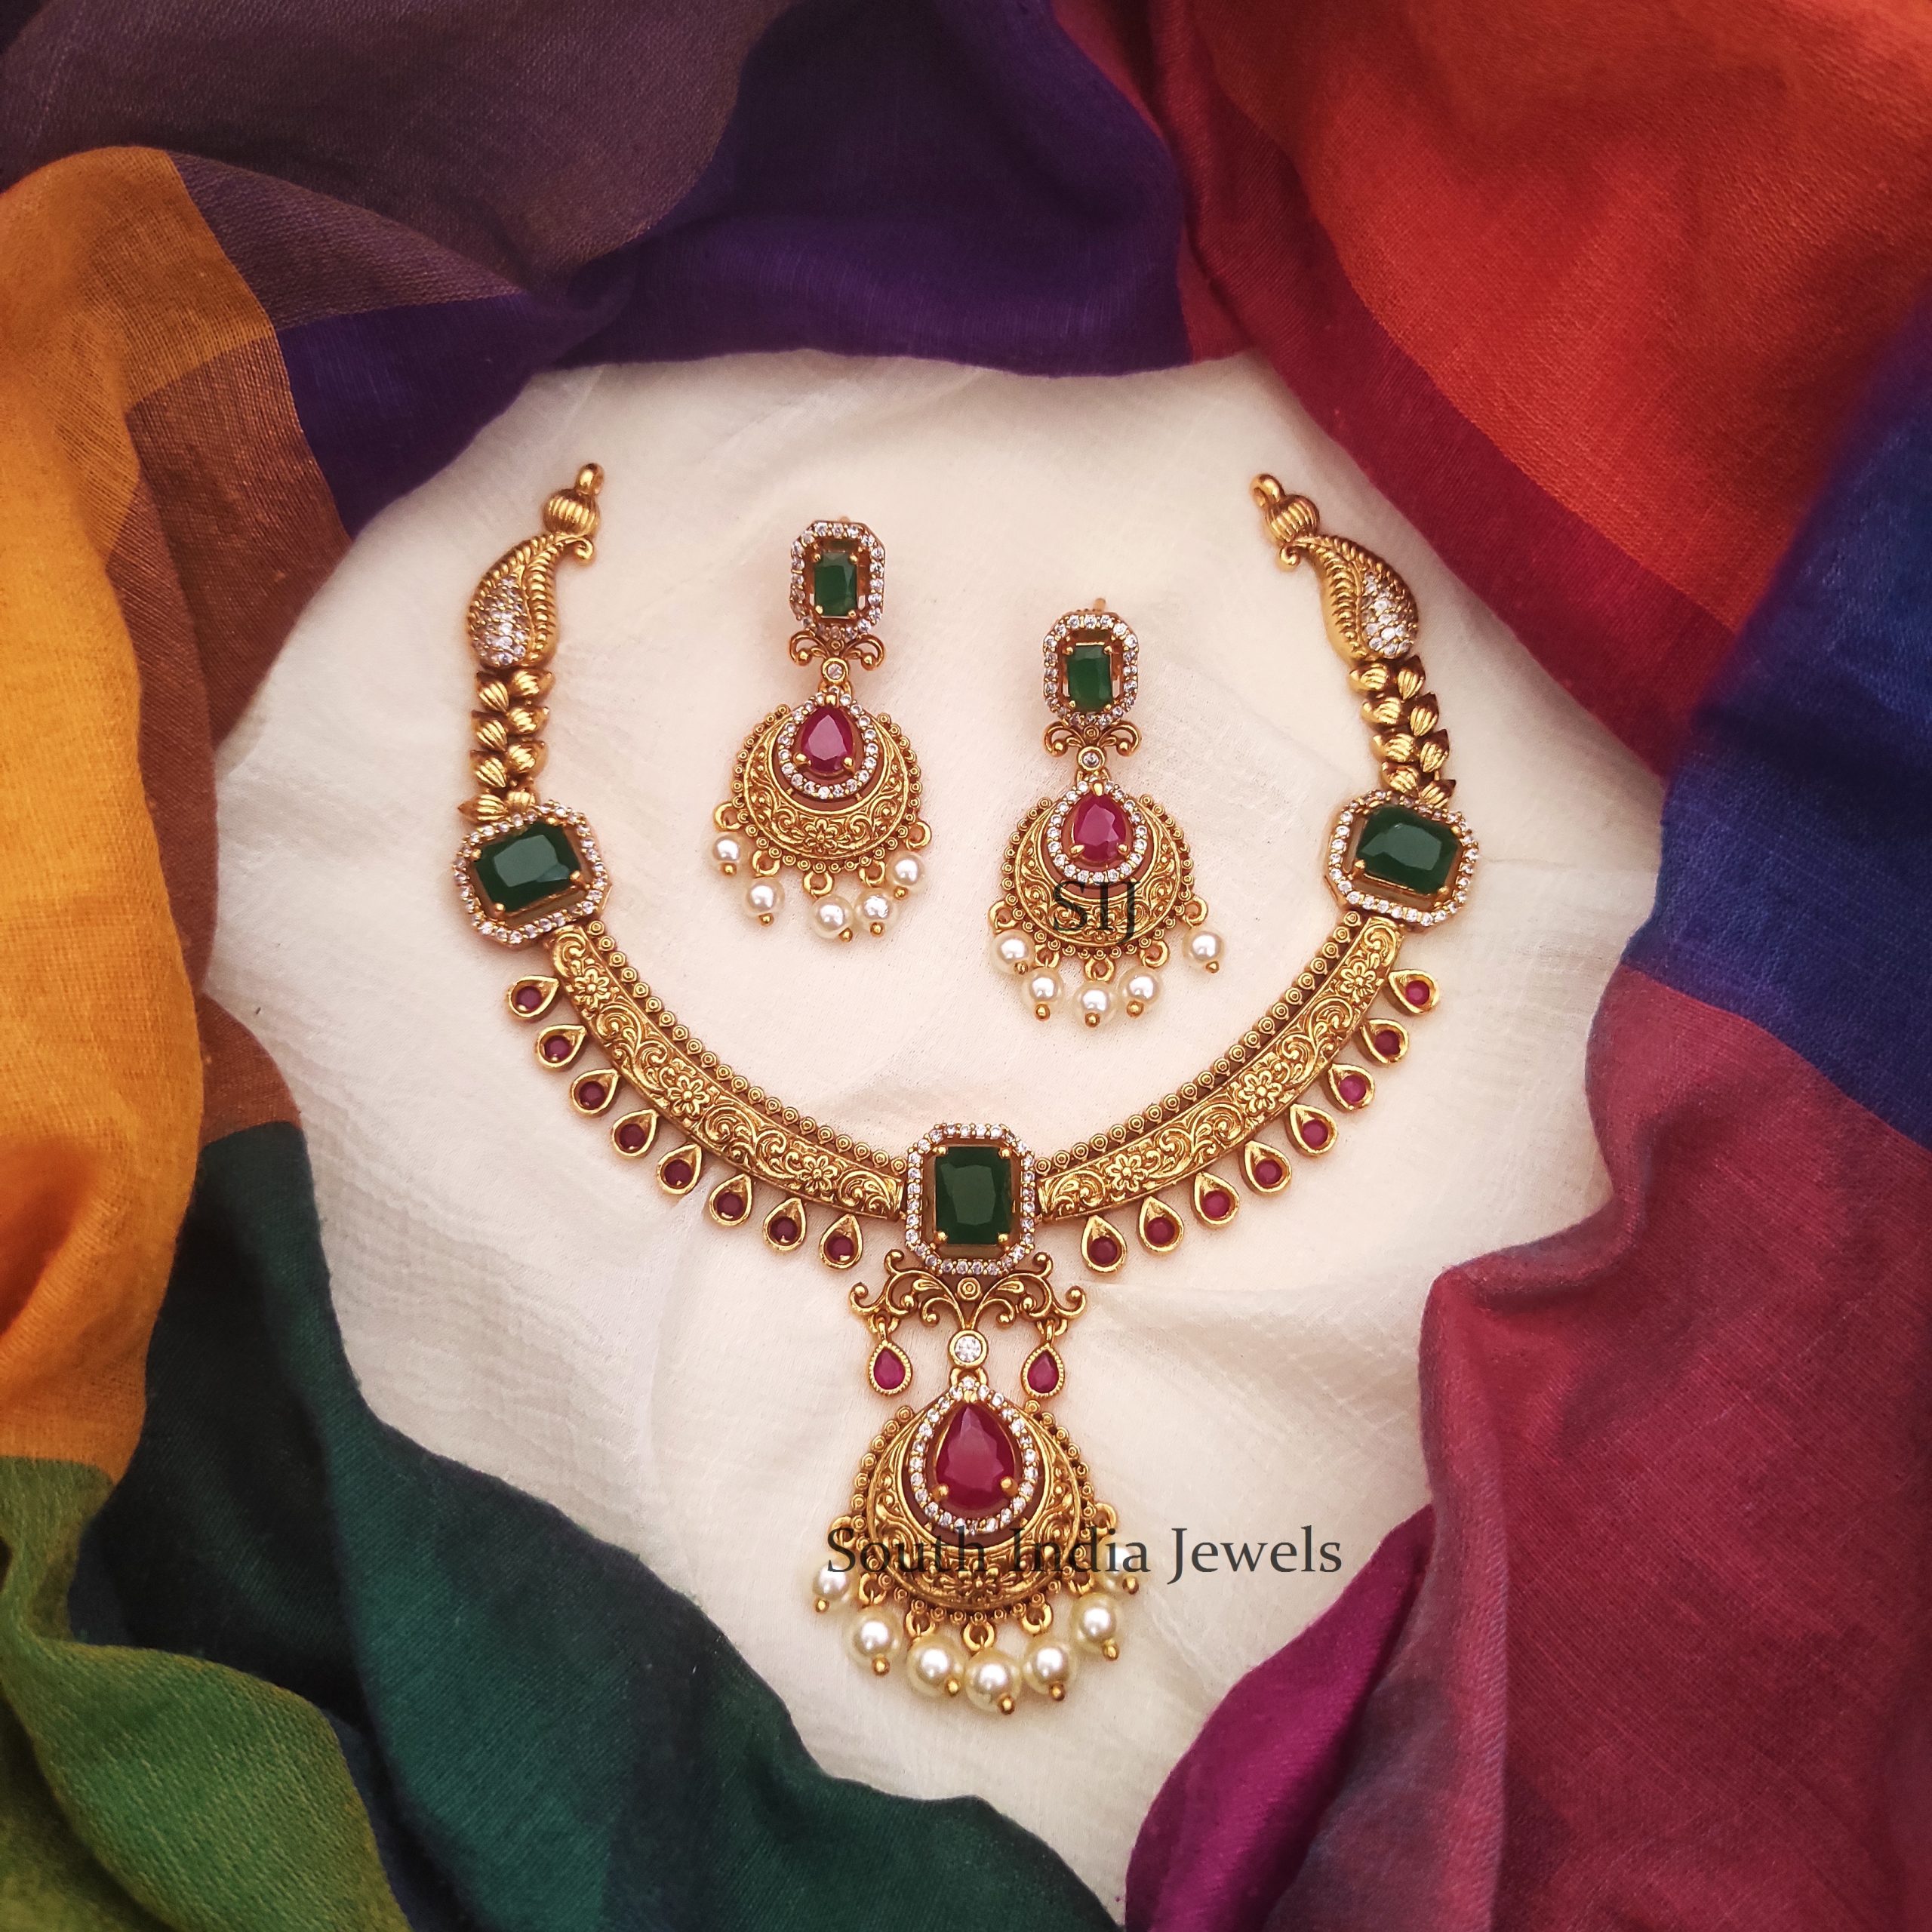 Pendant Design Jewellery Set - South India Jewels